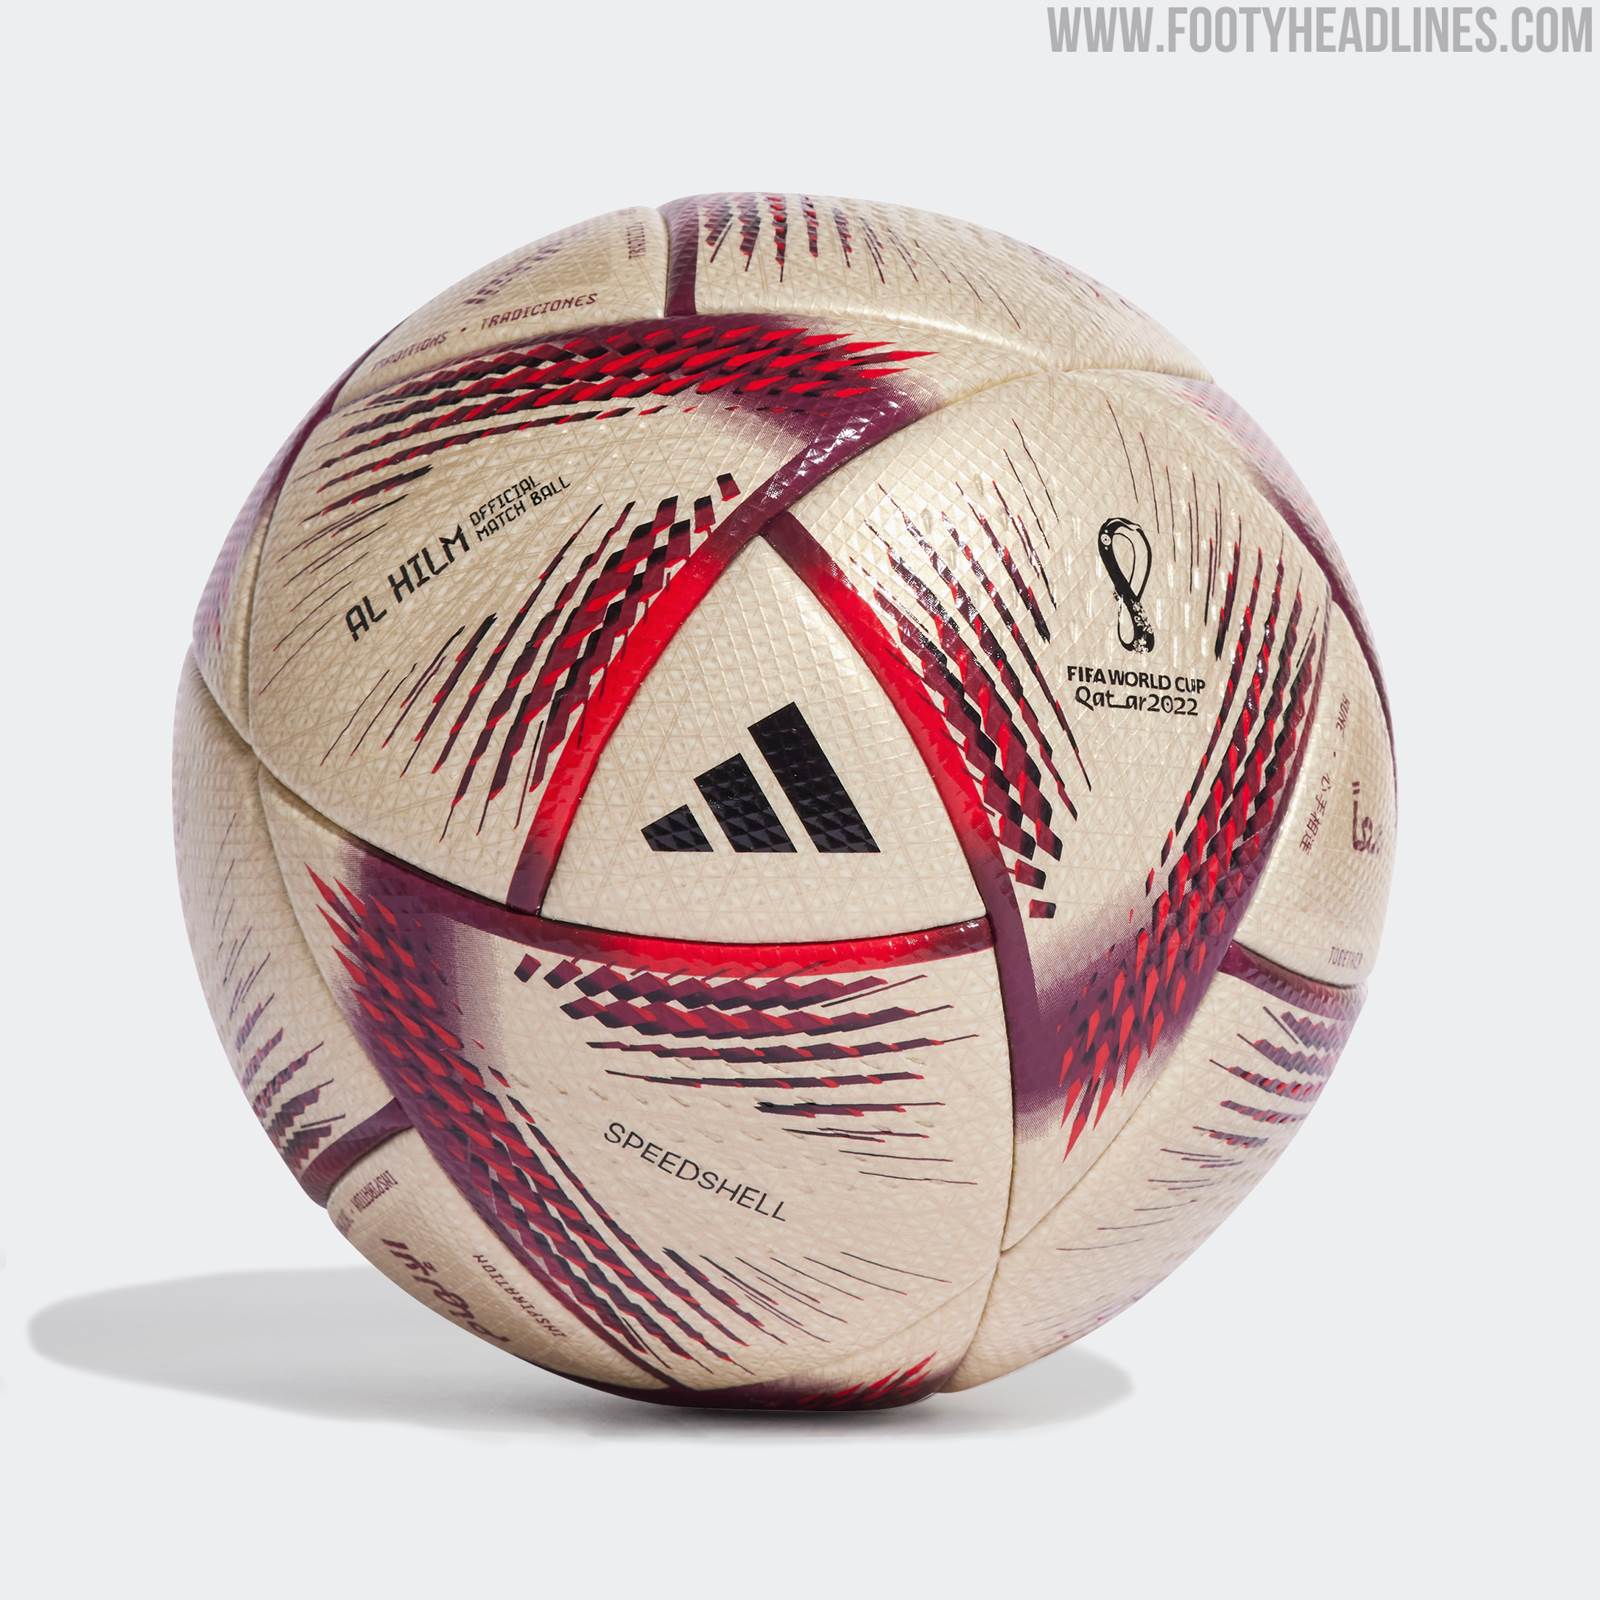 Gold Adidas 'Al Hilm' 2022 World Cup Semi-Final & Final Ball Released -  Footy Headlines